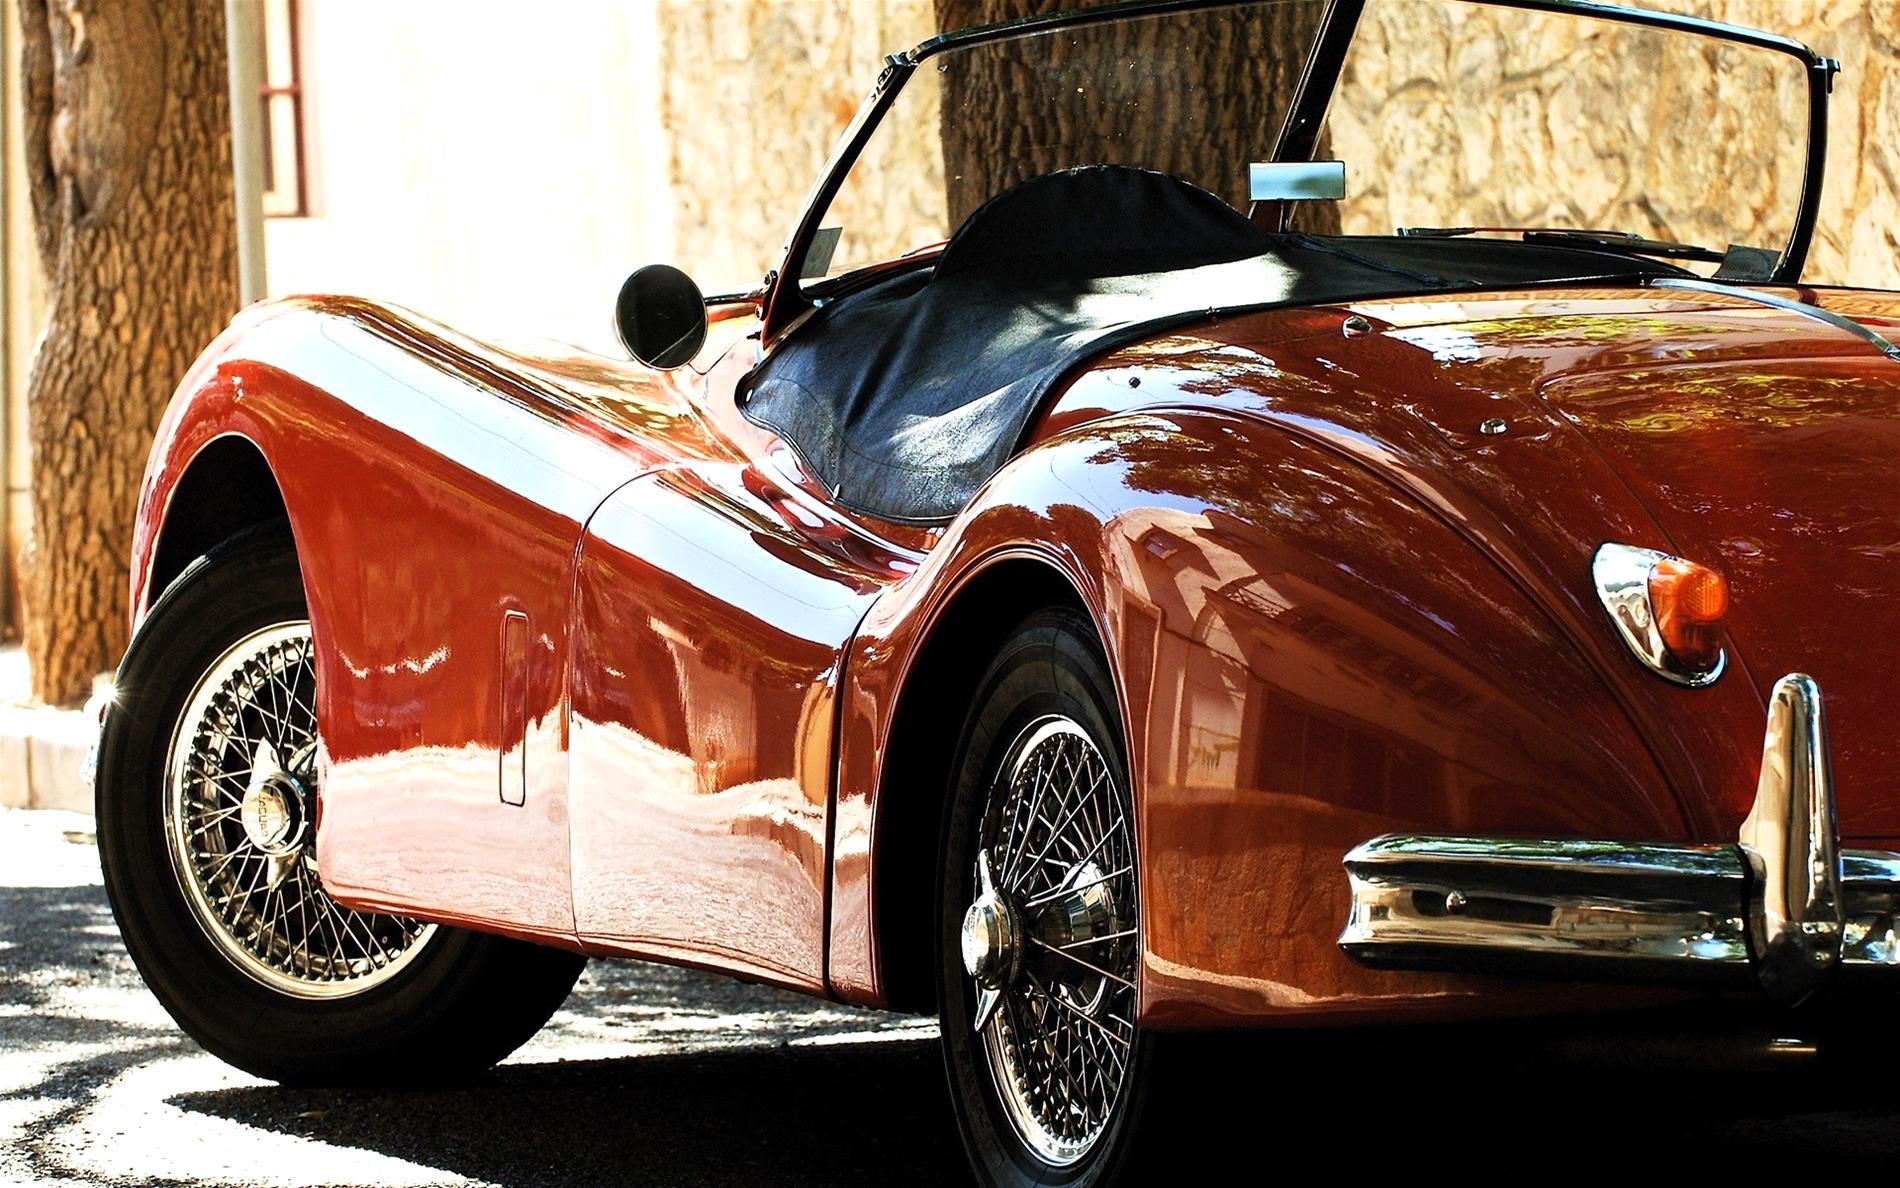 The-Best-Vintage-Car-Wallpapers-29-Best Vintage Car-wv-aston martin-ferarri